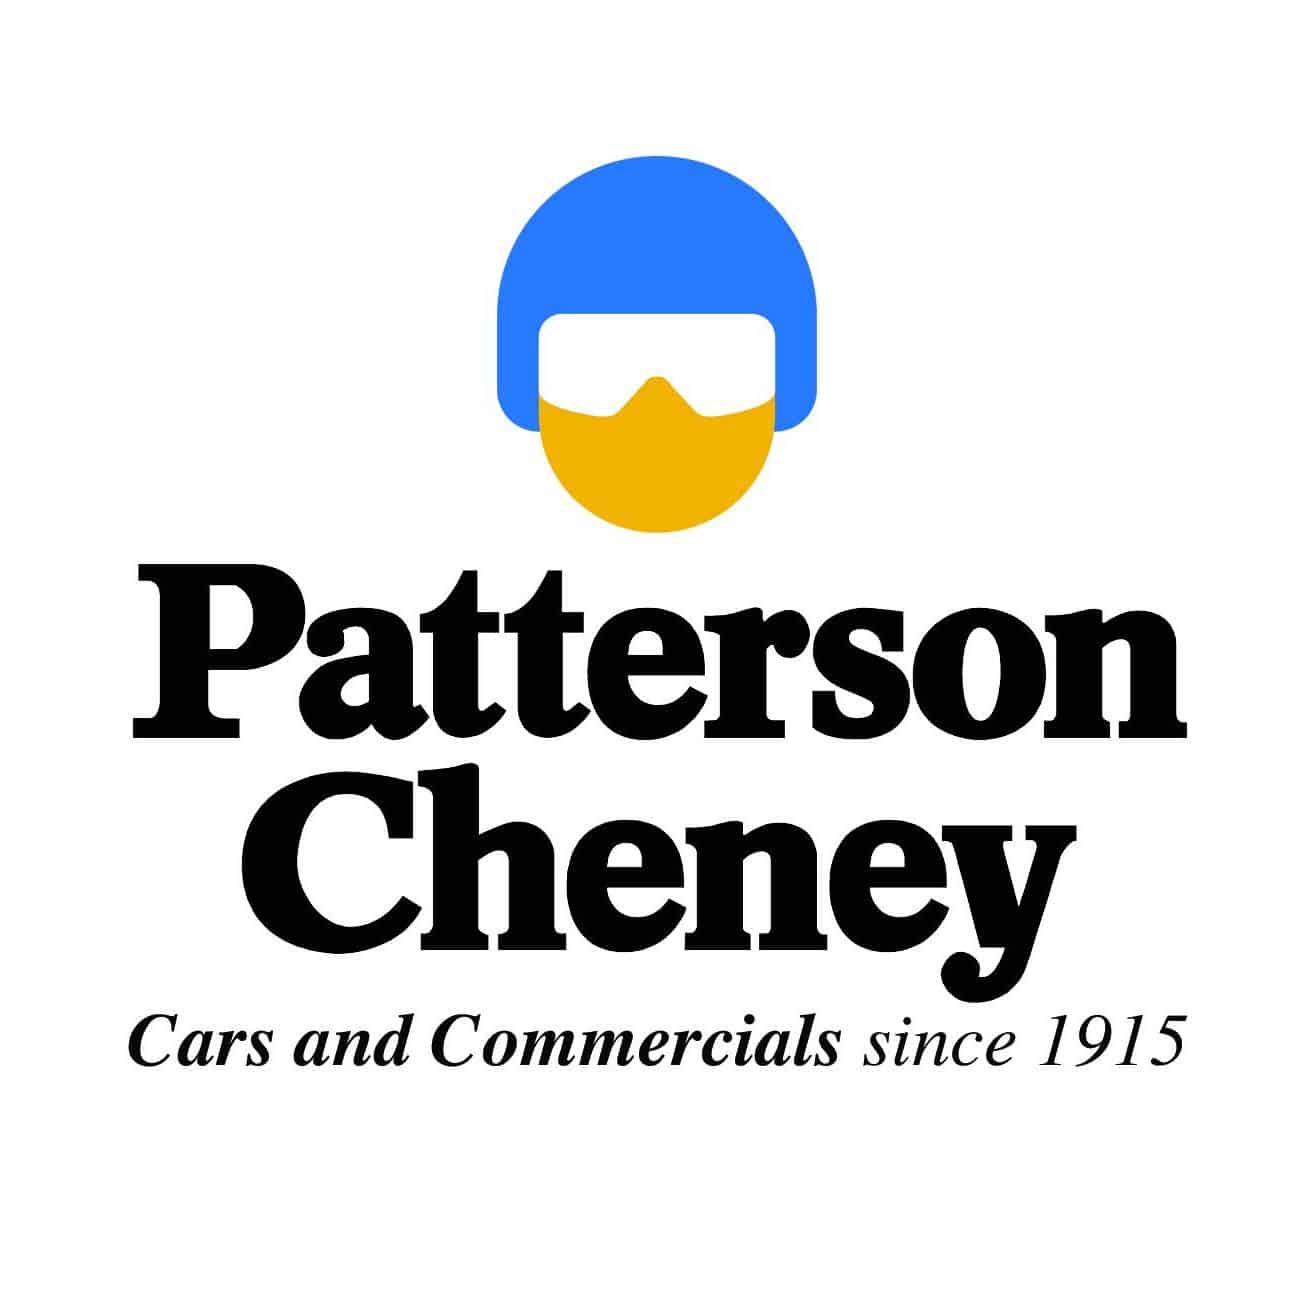 Patterson Cheney